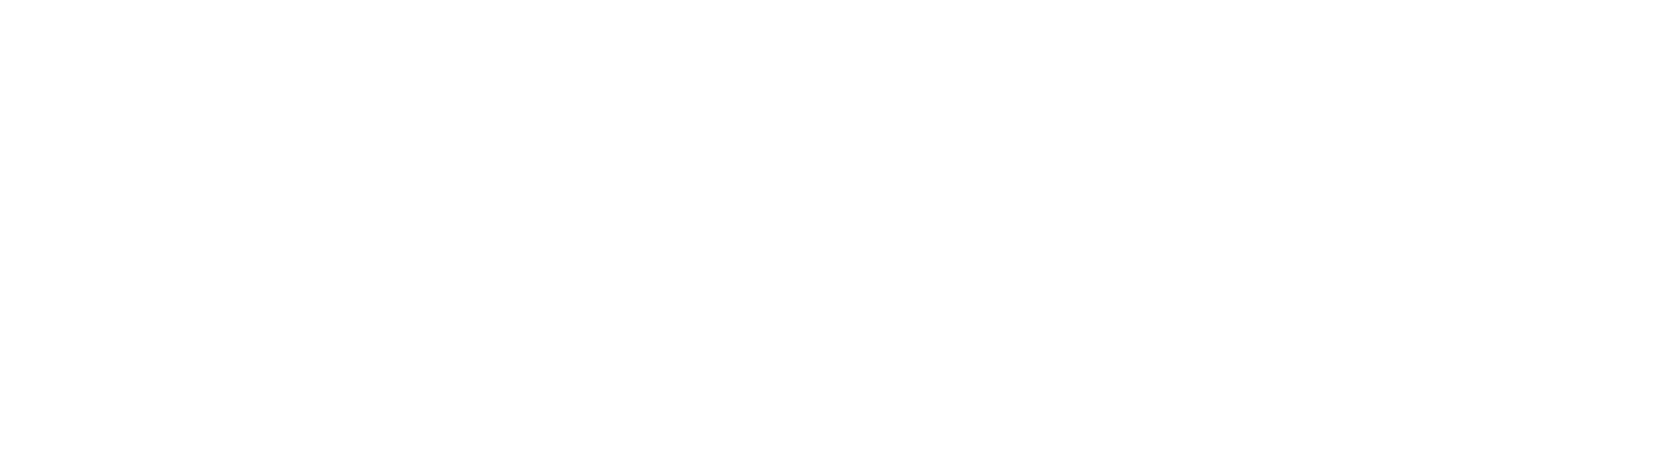 MetaOptima